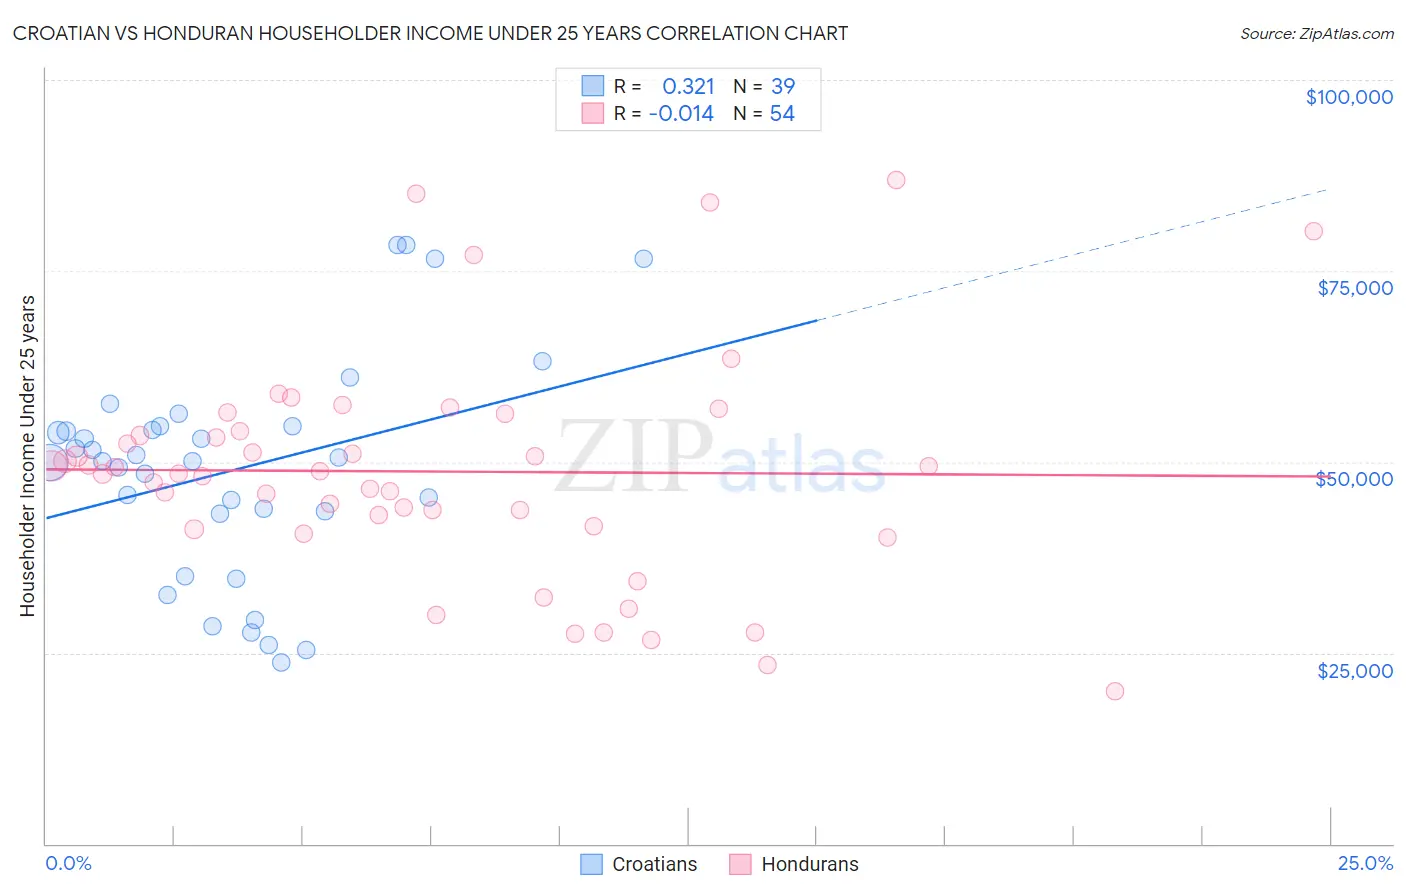 Croatian vs Honduran Householder Income Under 25 years